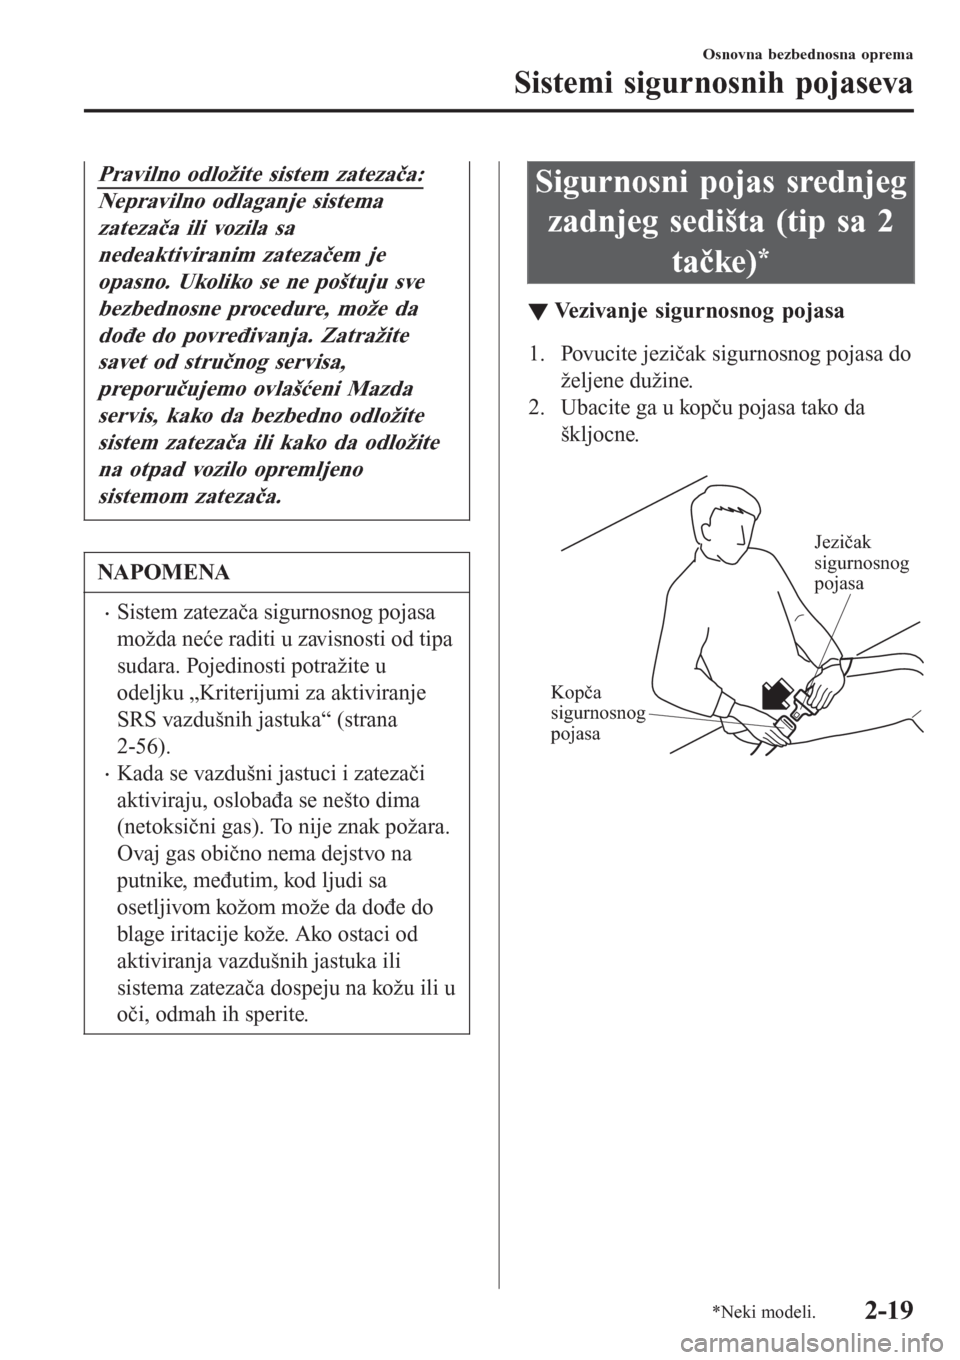 MAZDA MODEL CX-3 2016  Korisničko uputstvo (in Serbian) Pravilno odložite sistem zatezača:
Nepravilno odlaganje sistema
zatezača ili vozila sa
nedeaktiviranim zatezačem je
opasno. Ukoliko se ne poštuju sve
bezbednosne procedure, može da
dođe do povr